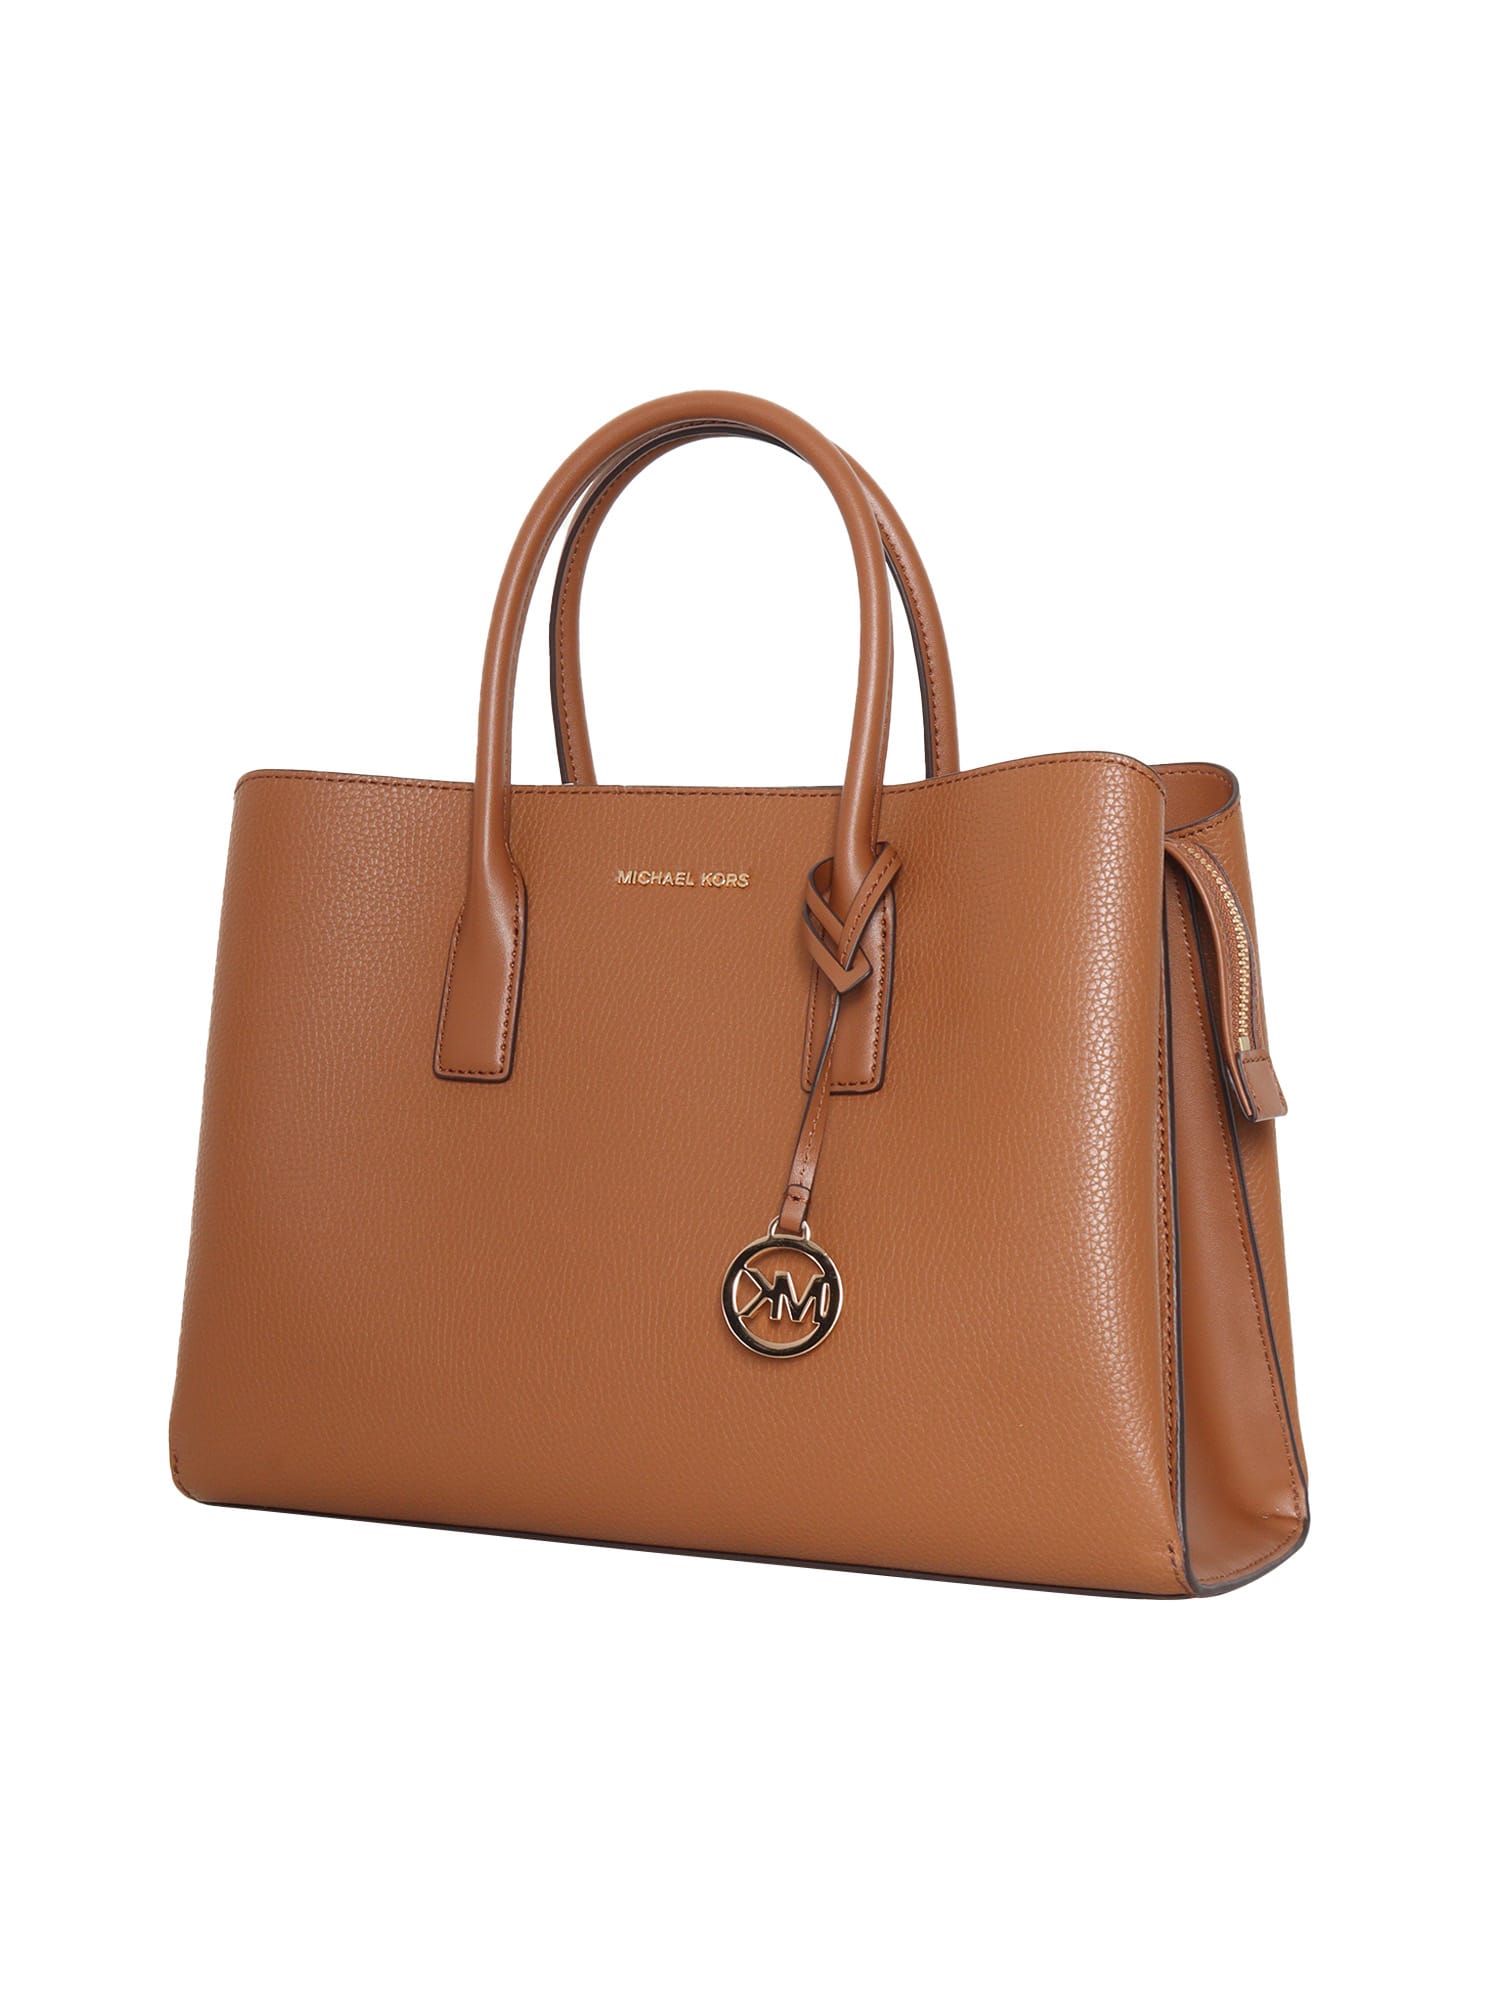 Shop Michael Kors Brown Leather Satchel Bag